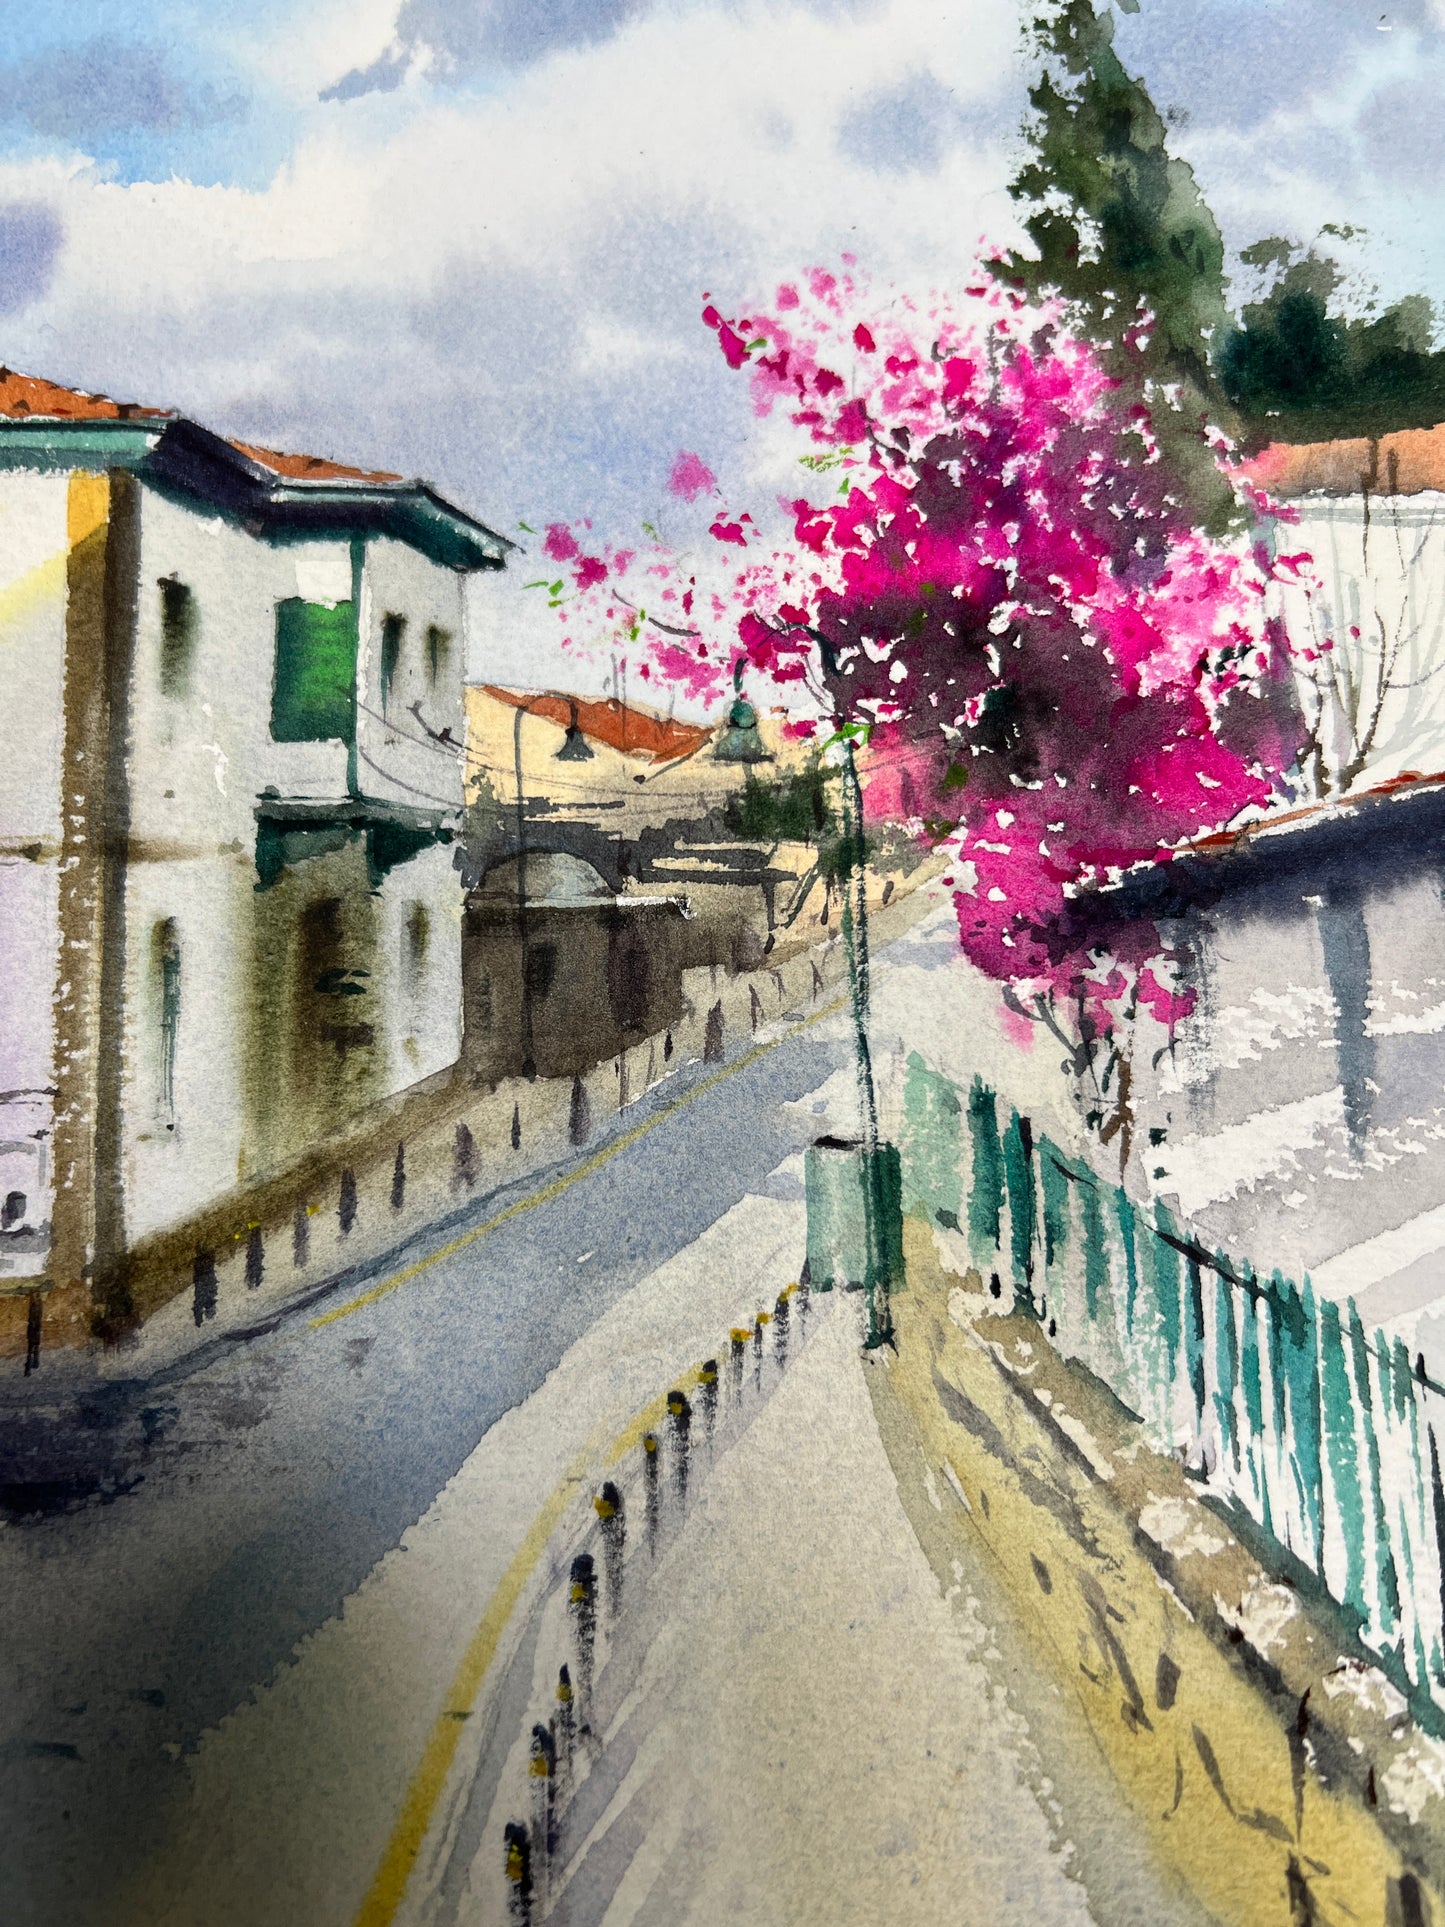 Nicosia Painting Original Watercolor , Cyprus City Artwork, Street Scene, Mediterranean Wall Art, Travel Gift for Her